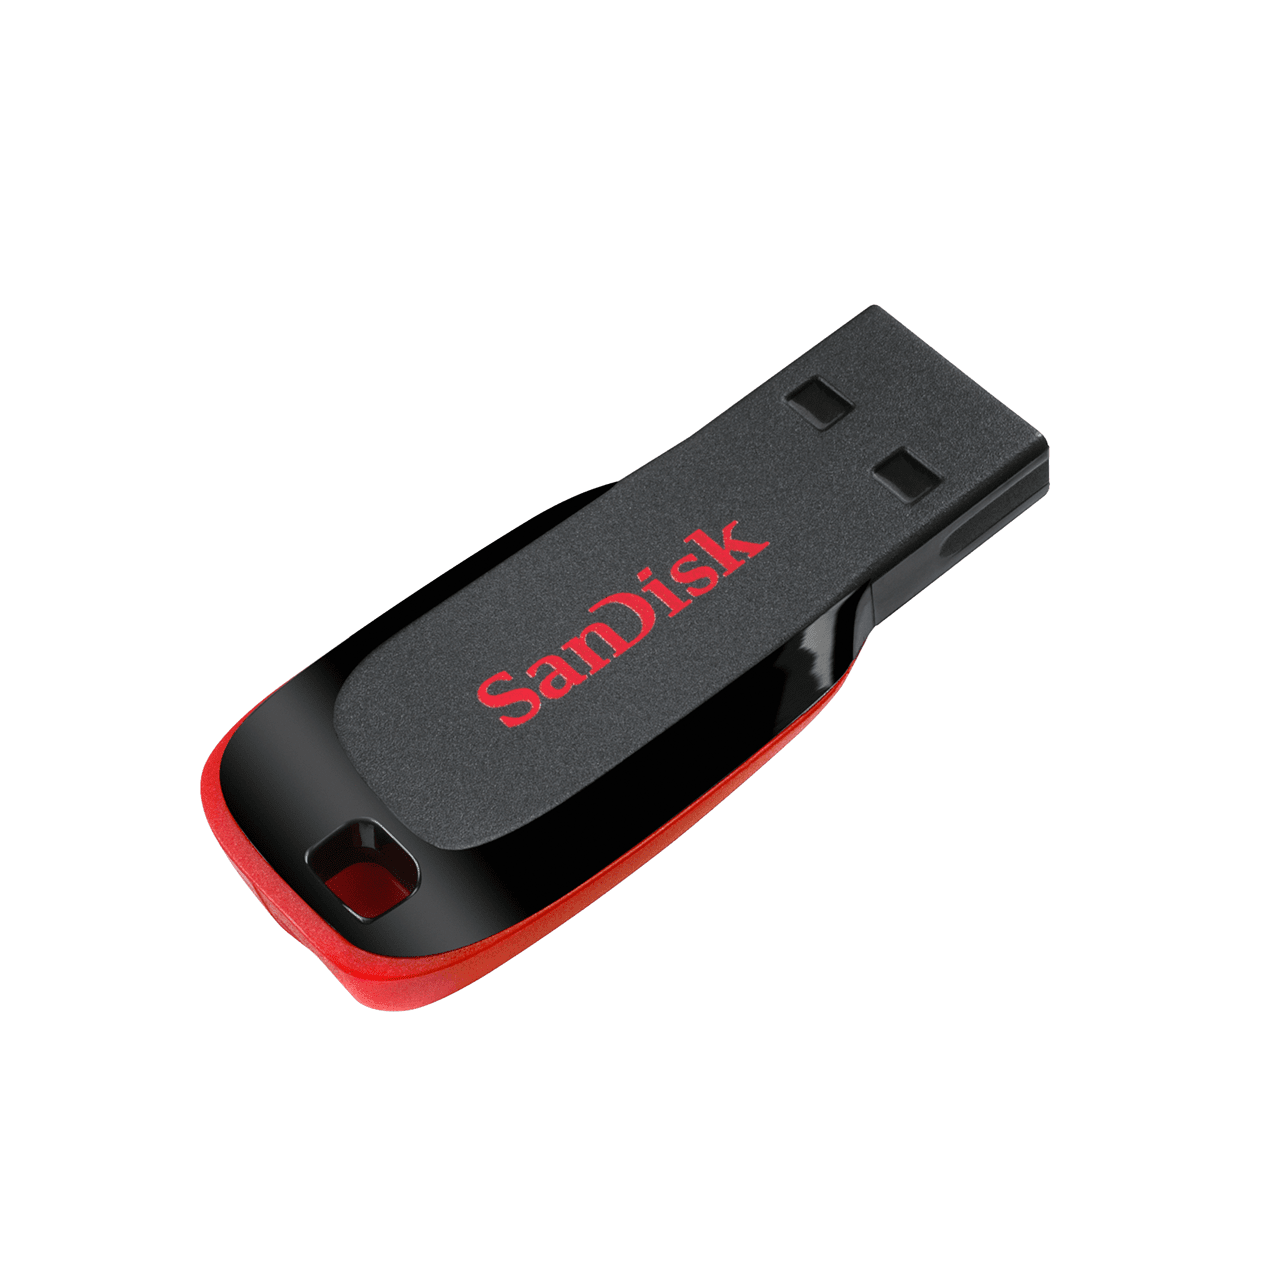 Sandisk Cruzer Blade 32Gb USB 2.0 隨身碟 (黑色)